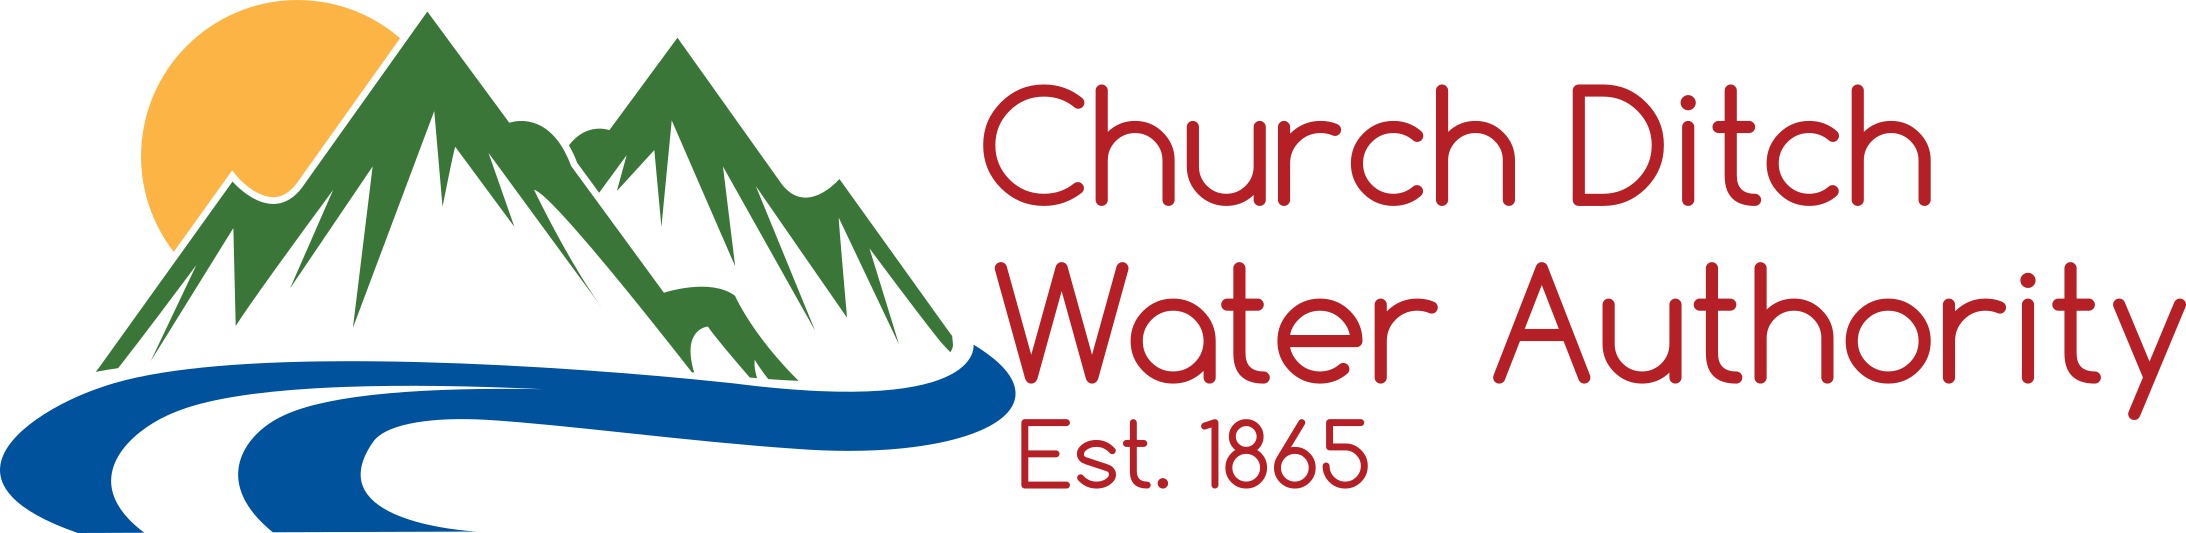 Organization logo of Church Ditch Water Authority